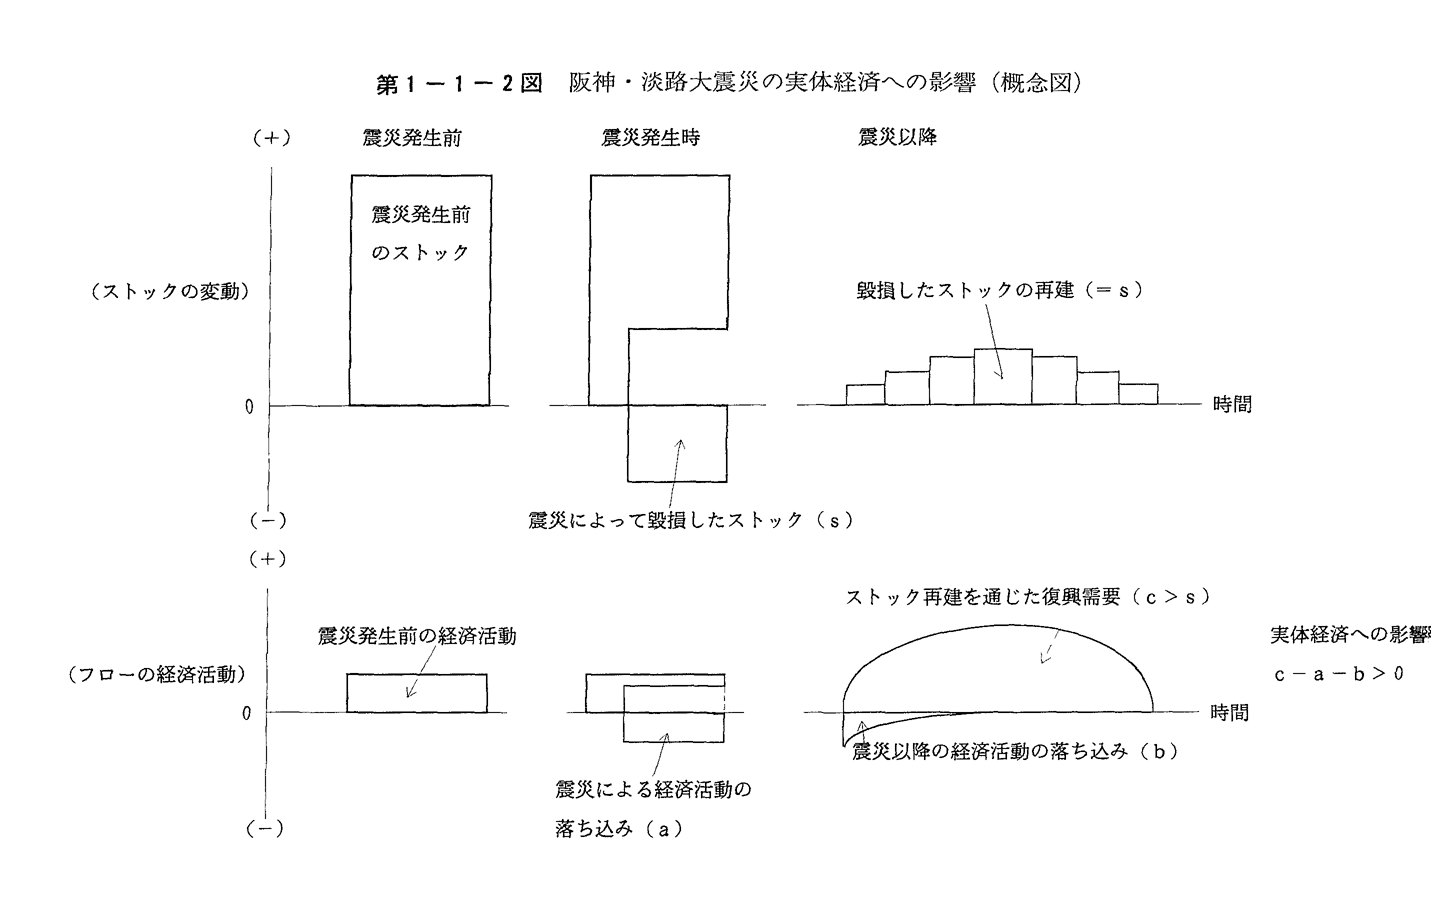 第1-1-2図 阪神・淡路大震災の実態経済への影響(概念図)